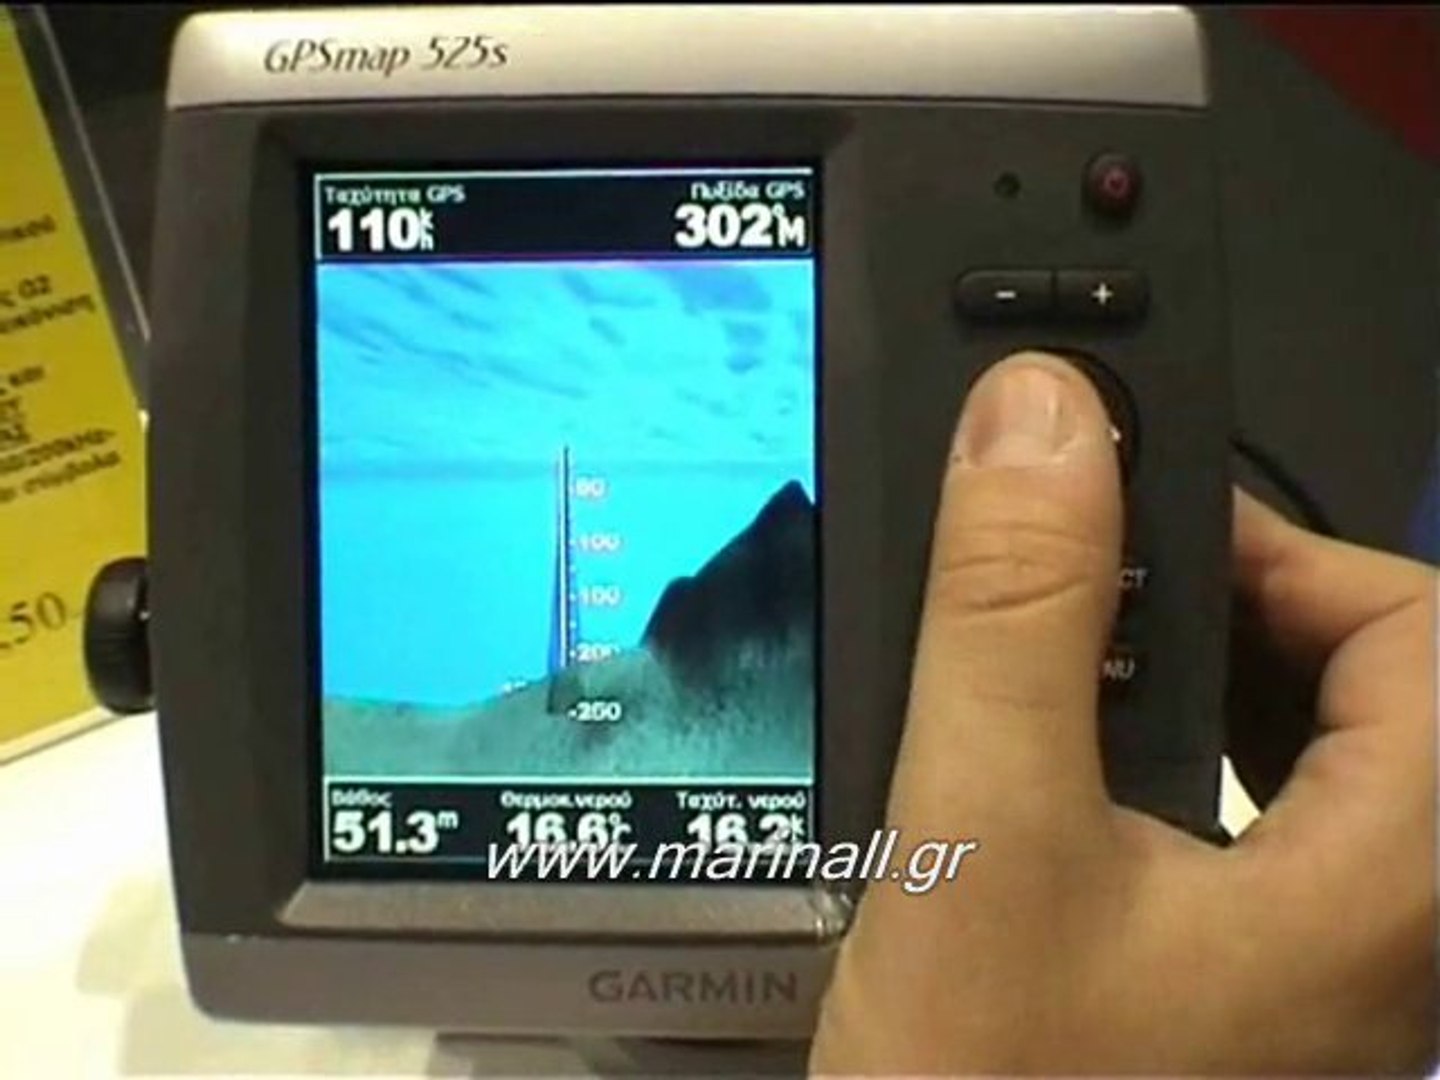 GPSMAP 525s GARMIN - video Dailymotion